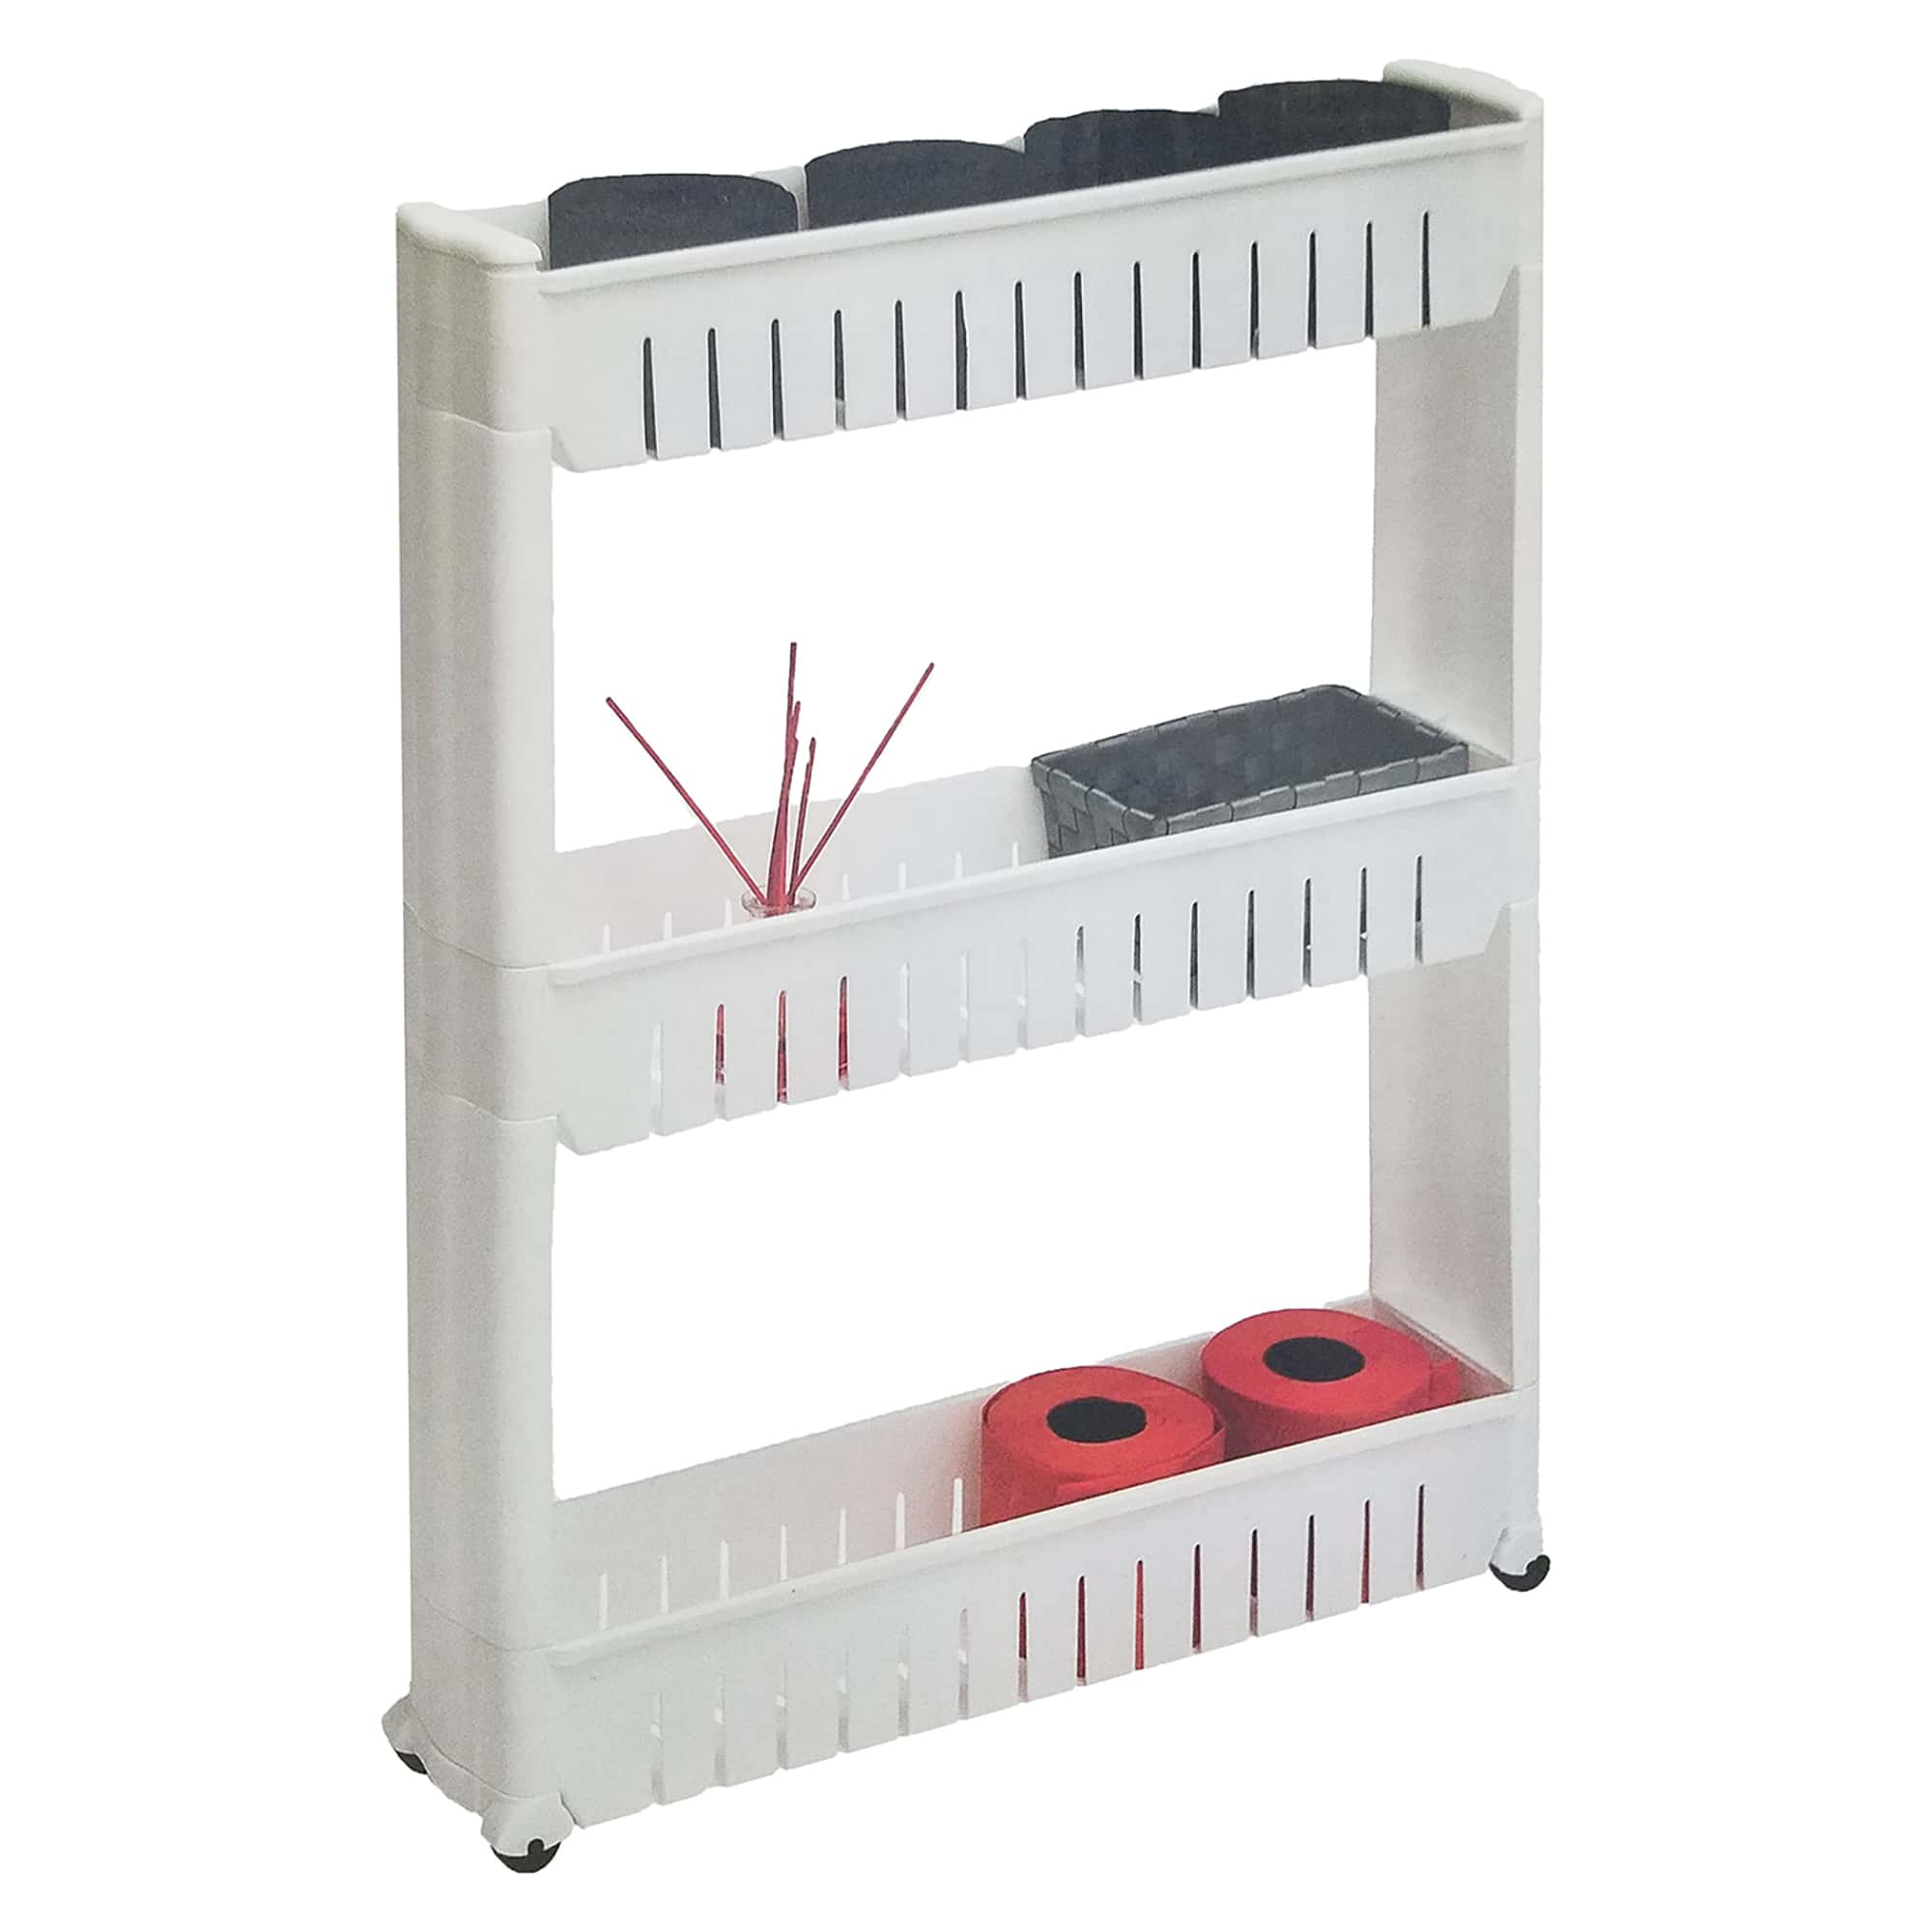 3-Tier Slim Rolling Utility Cart Multi-Purpose Organizer White – Kitchen, Bathroom, Office Storage - Easy to Assemble, Durable